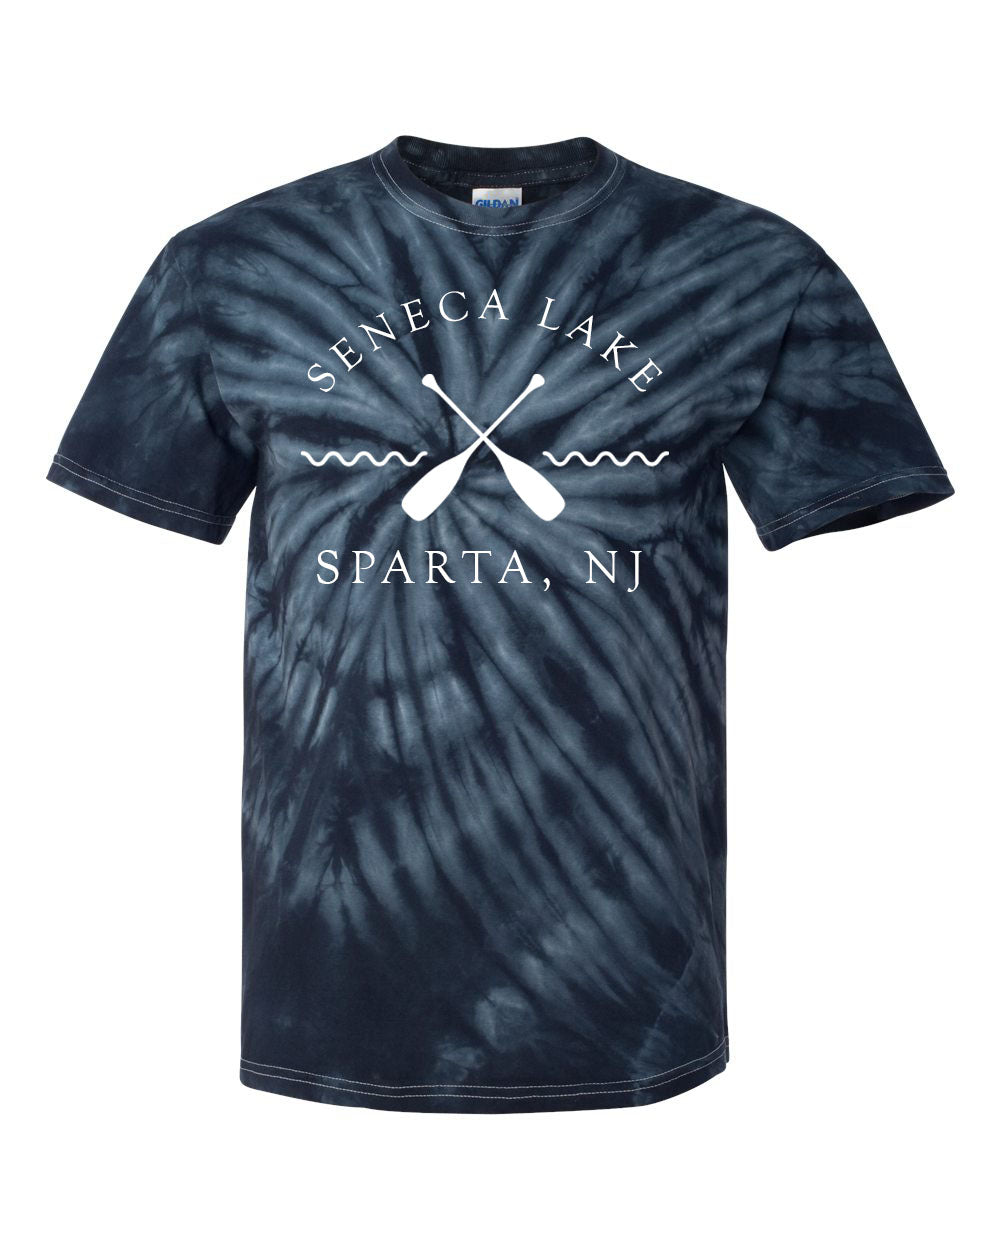 Seneca Lake Design 5 Tie Dye t-shirt